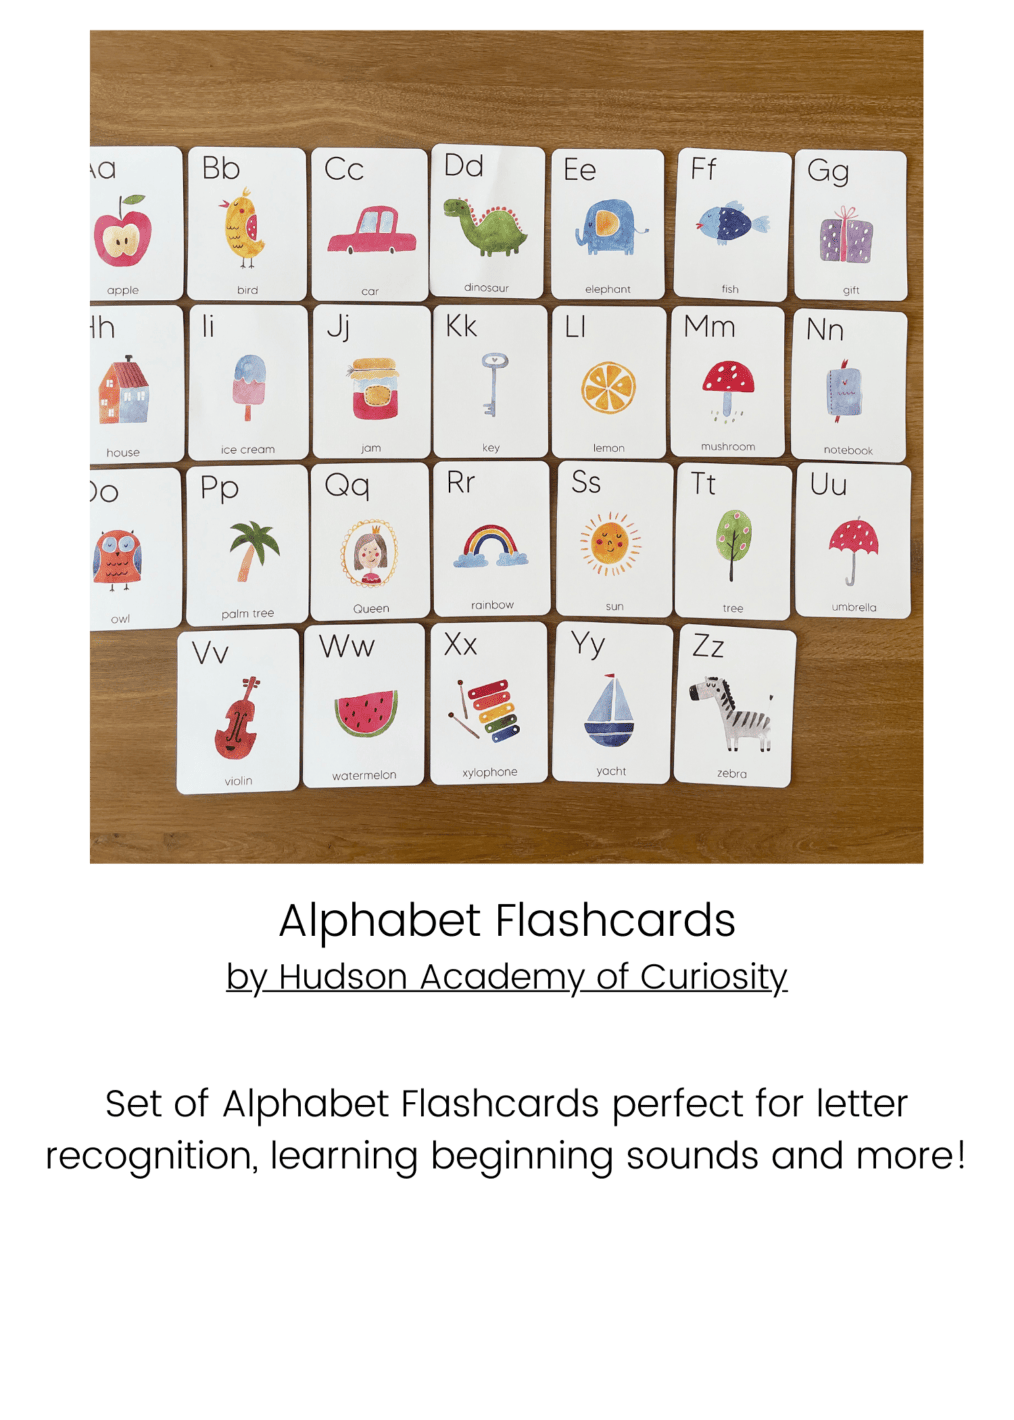 Alphabet Flashcards Info